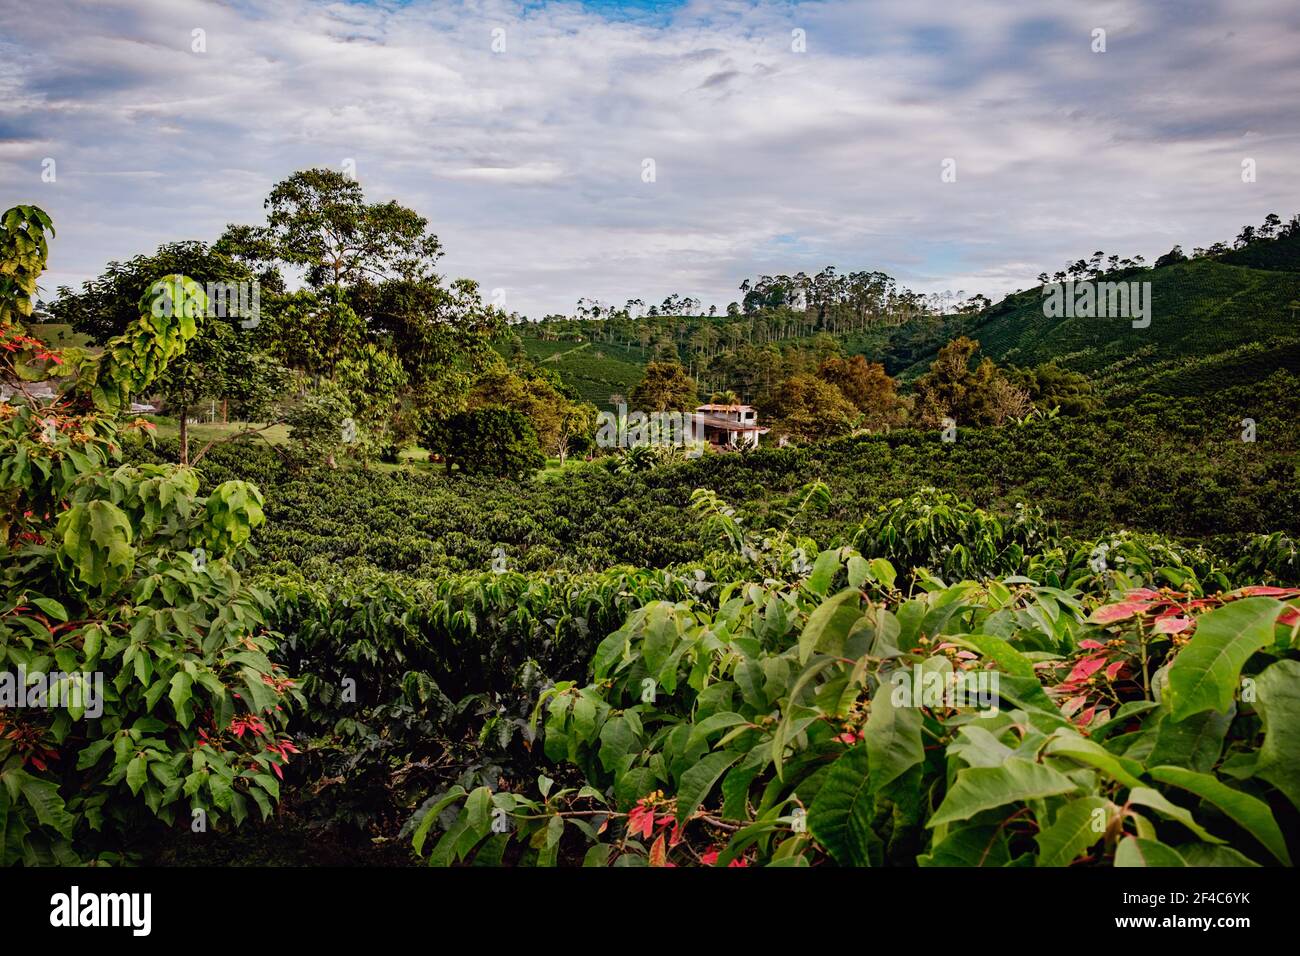 Poinsettia trees border a coffee plantation in Libano, Tolima, Colombia. Stock Photo